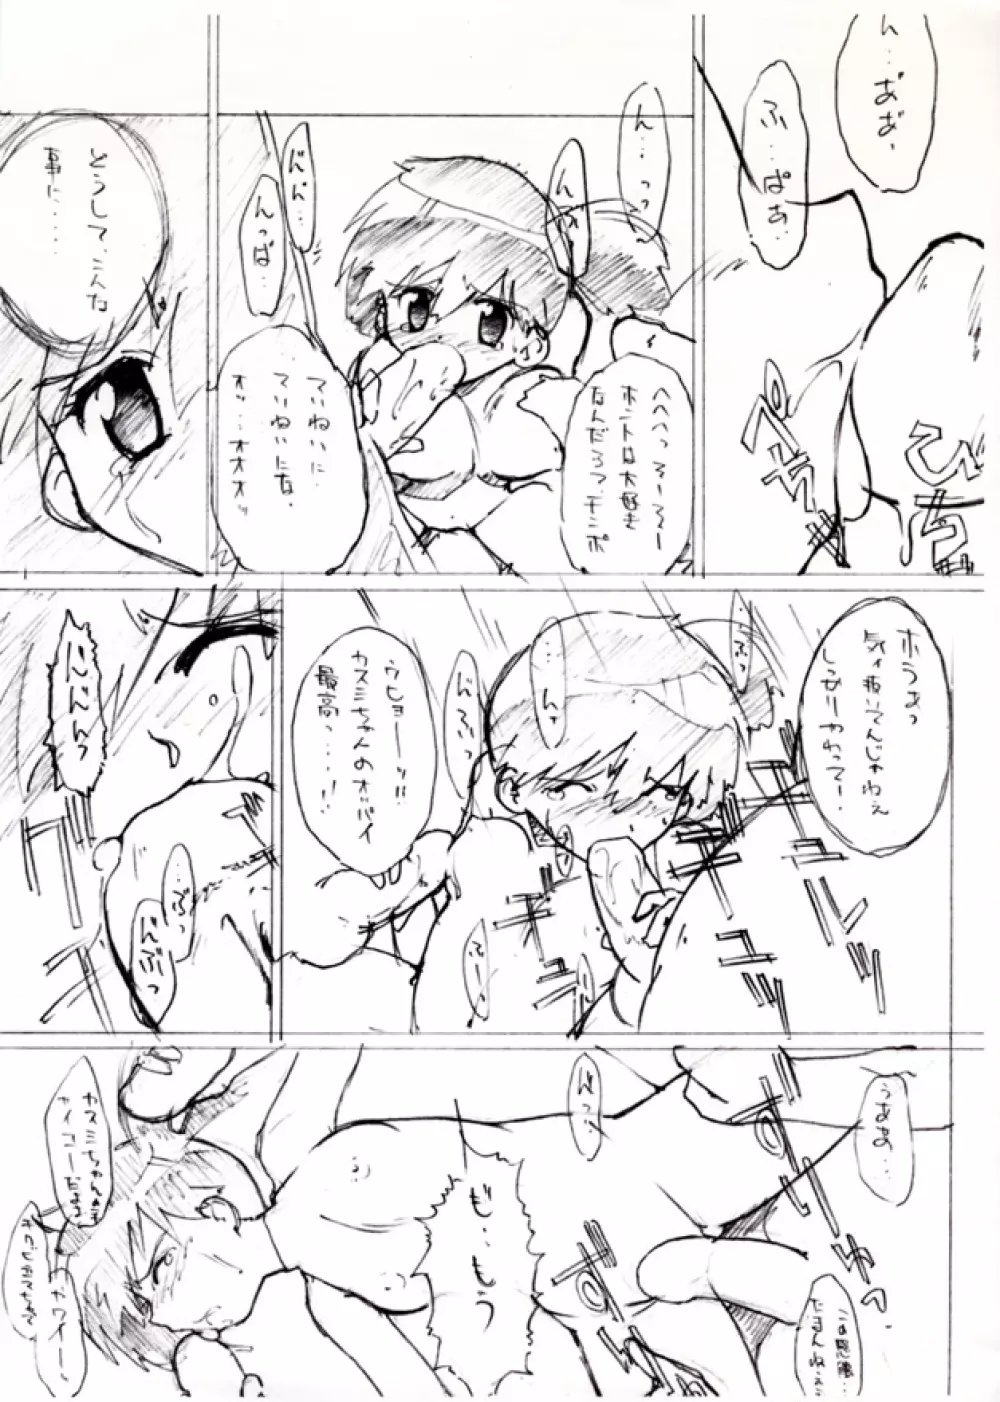 KASUMIX XPLOSION Kasumi Comic part5 - page6